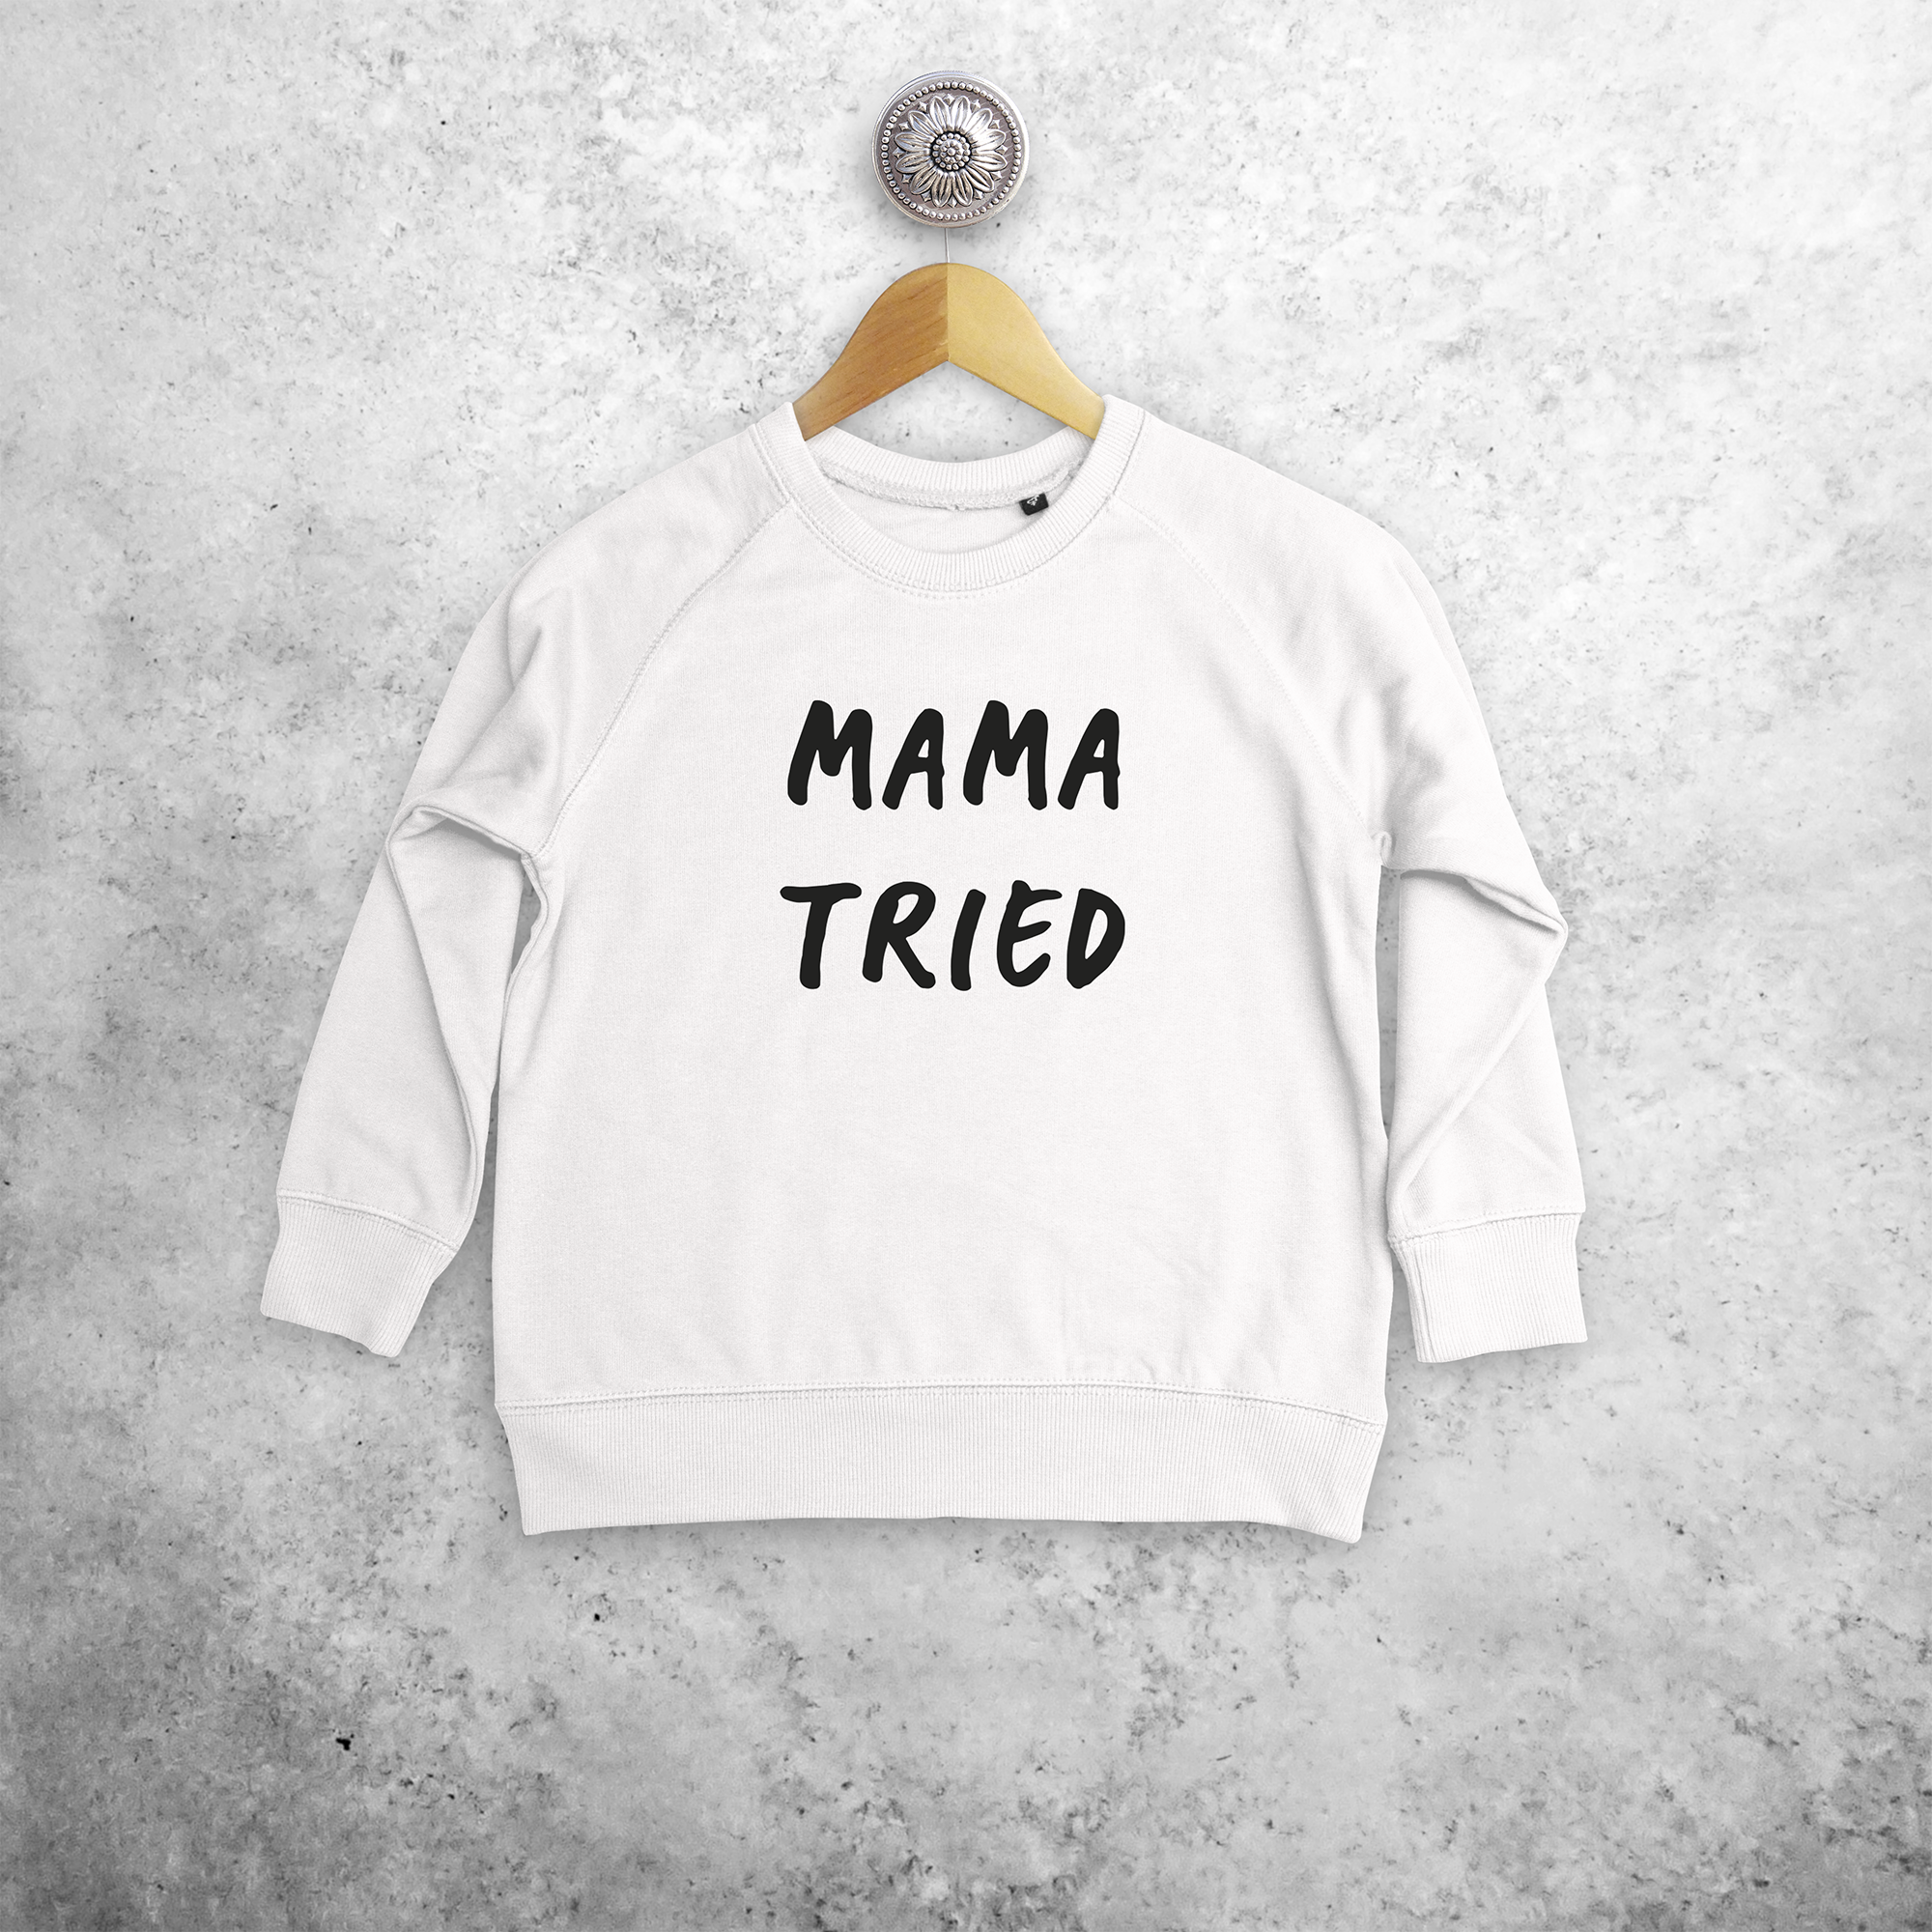 'Mama tried' kids sweater